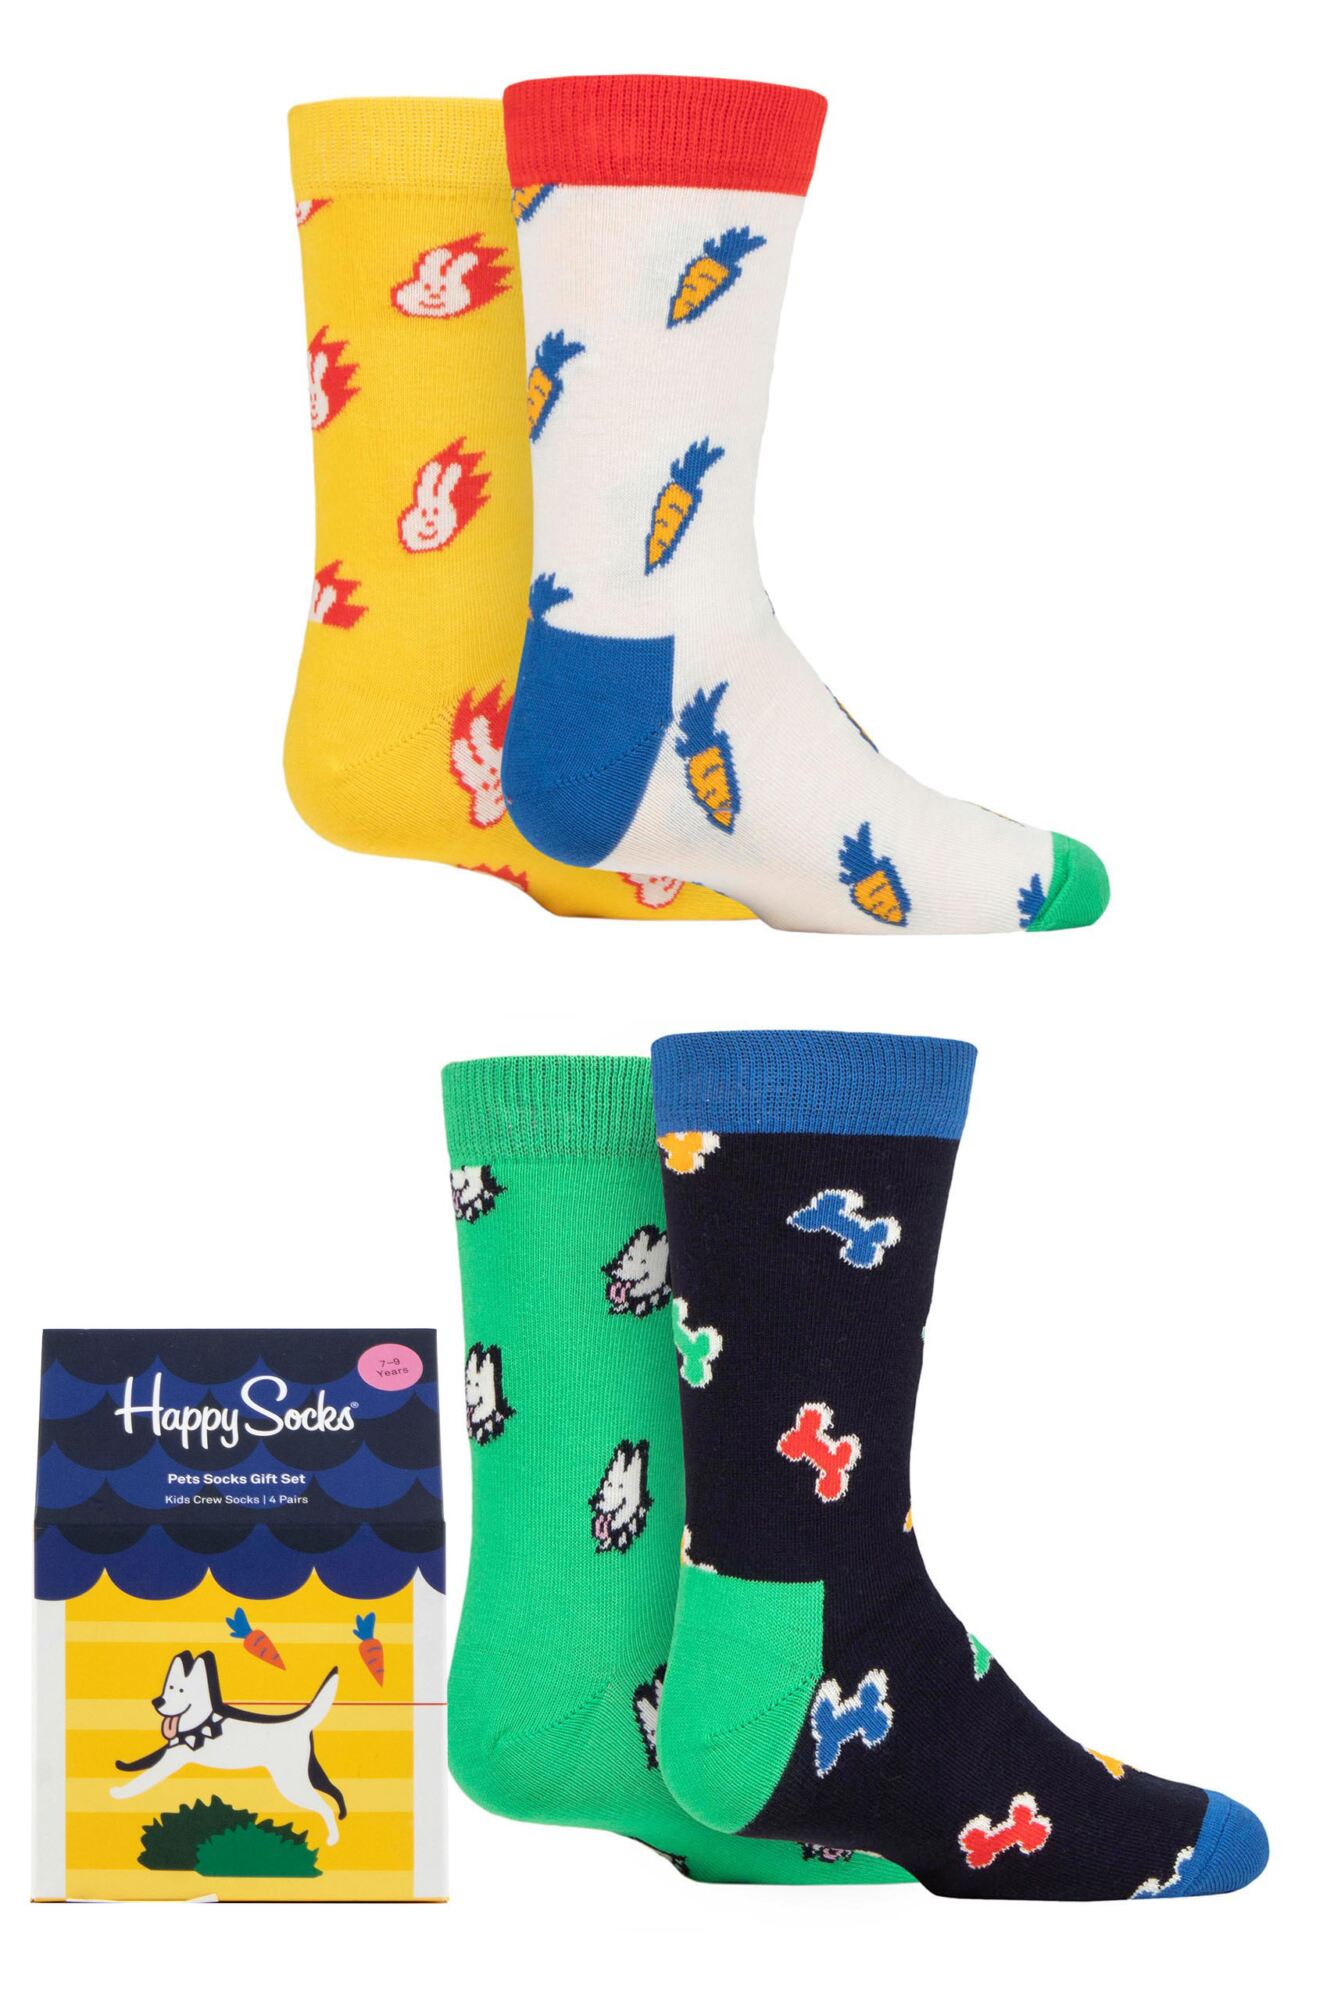 Boys and Girls 4 Pair Happy Socks Gift Boxed Pets Socks